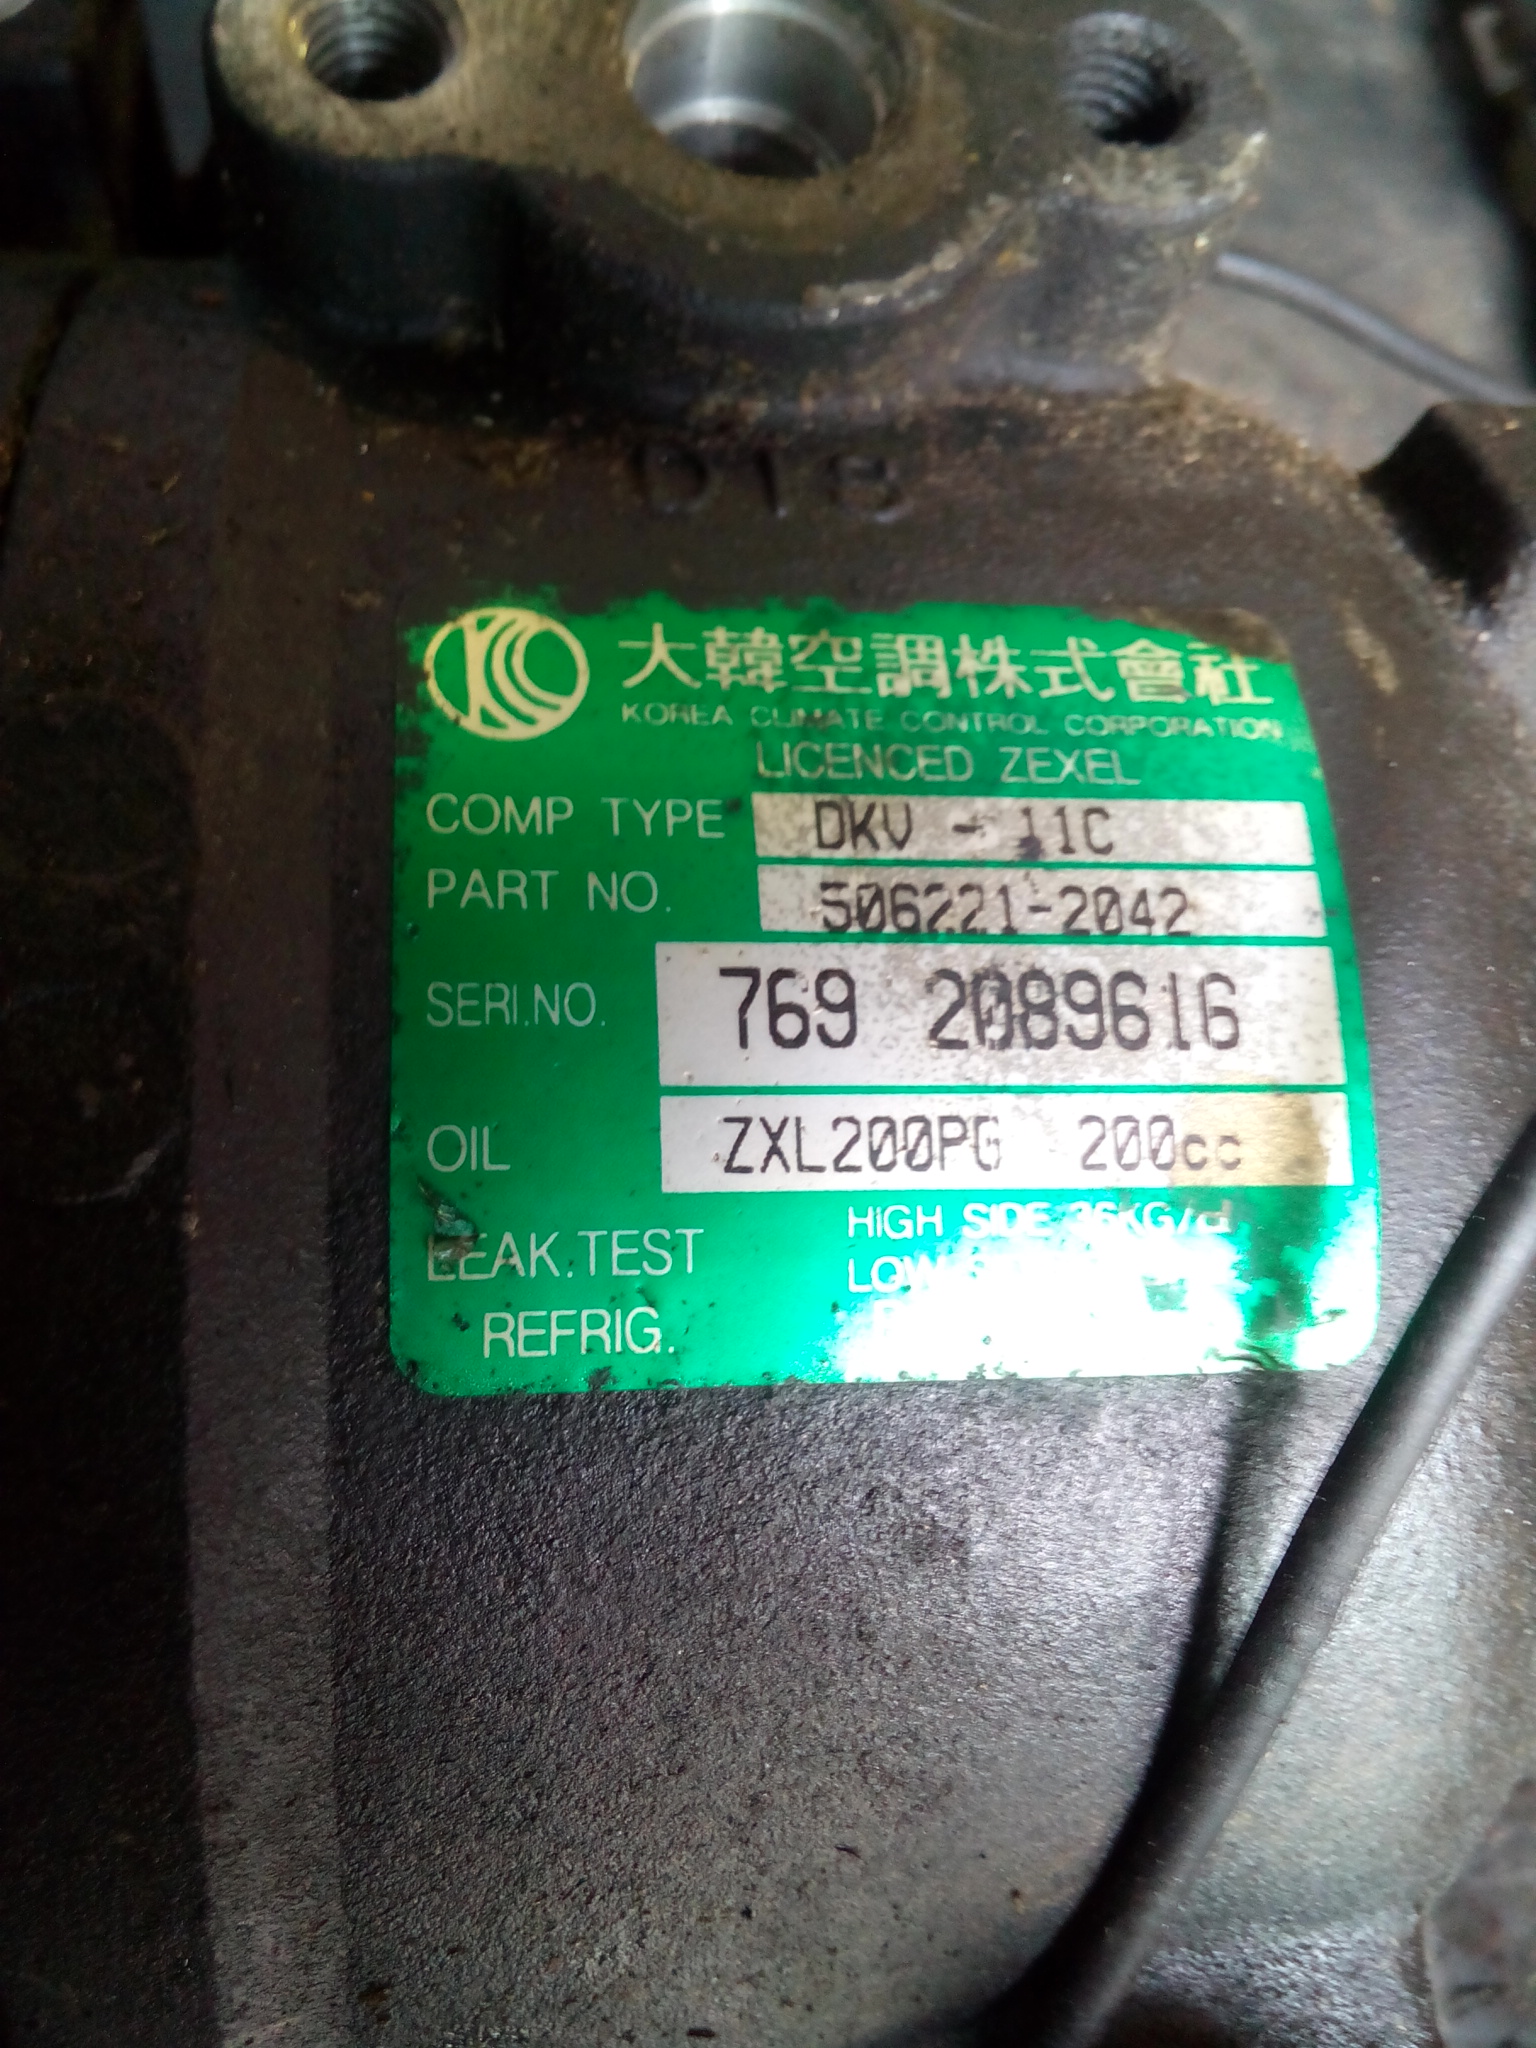 Компрессор кондиционера : 506021-2042 на Kia Sephia